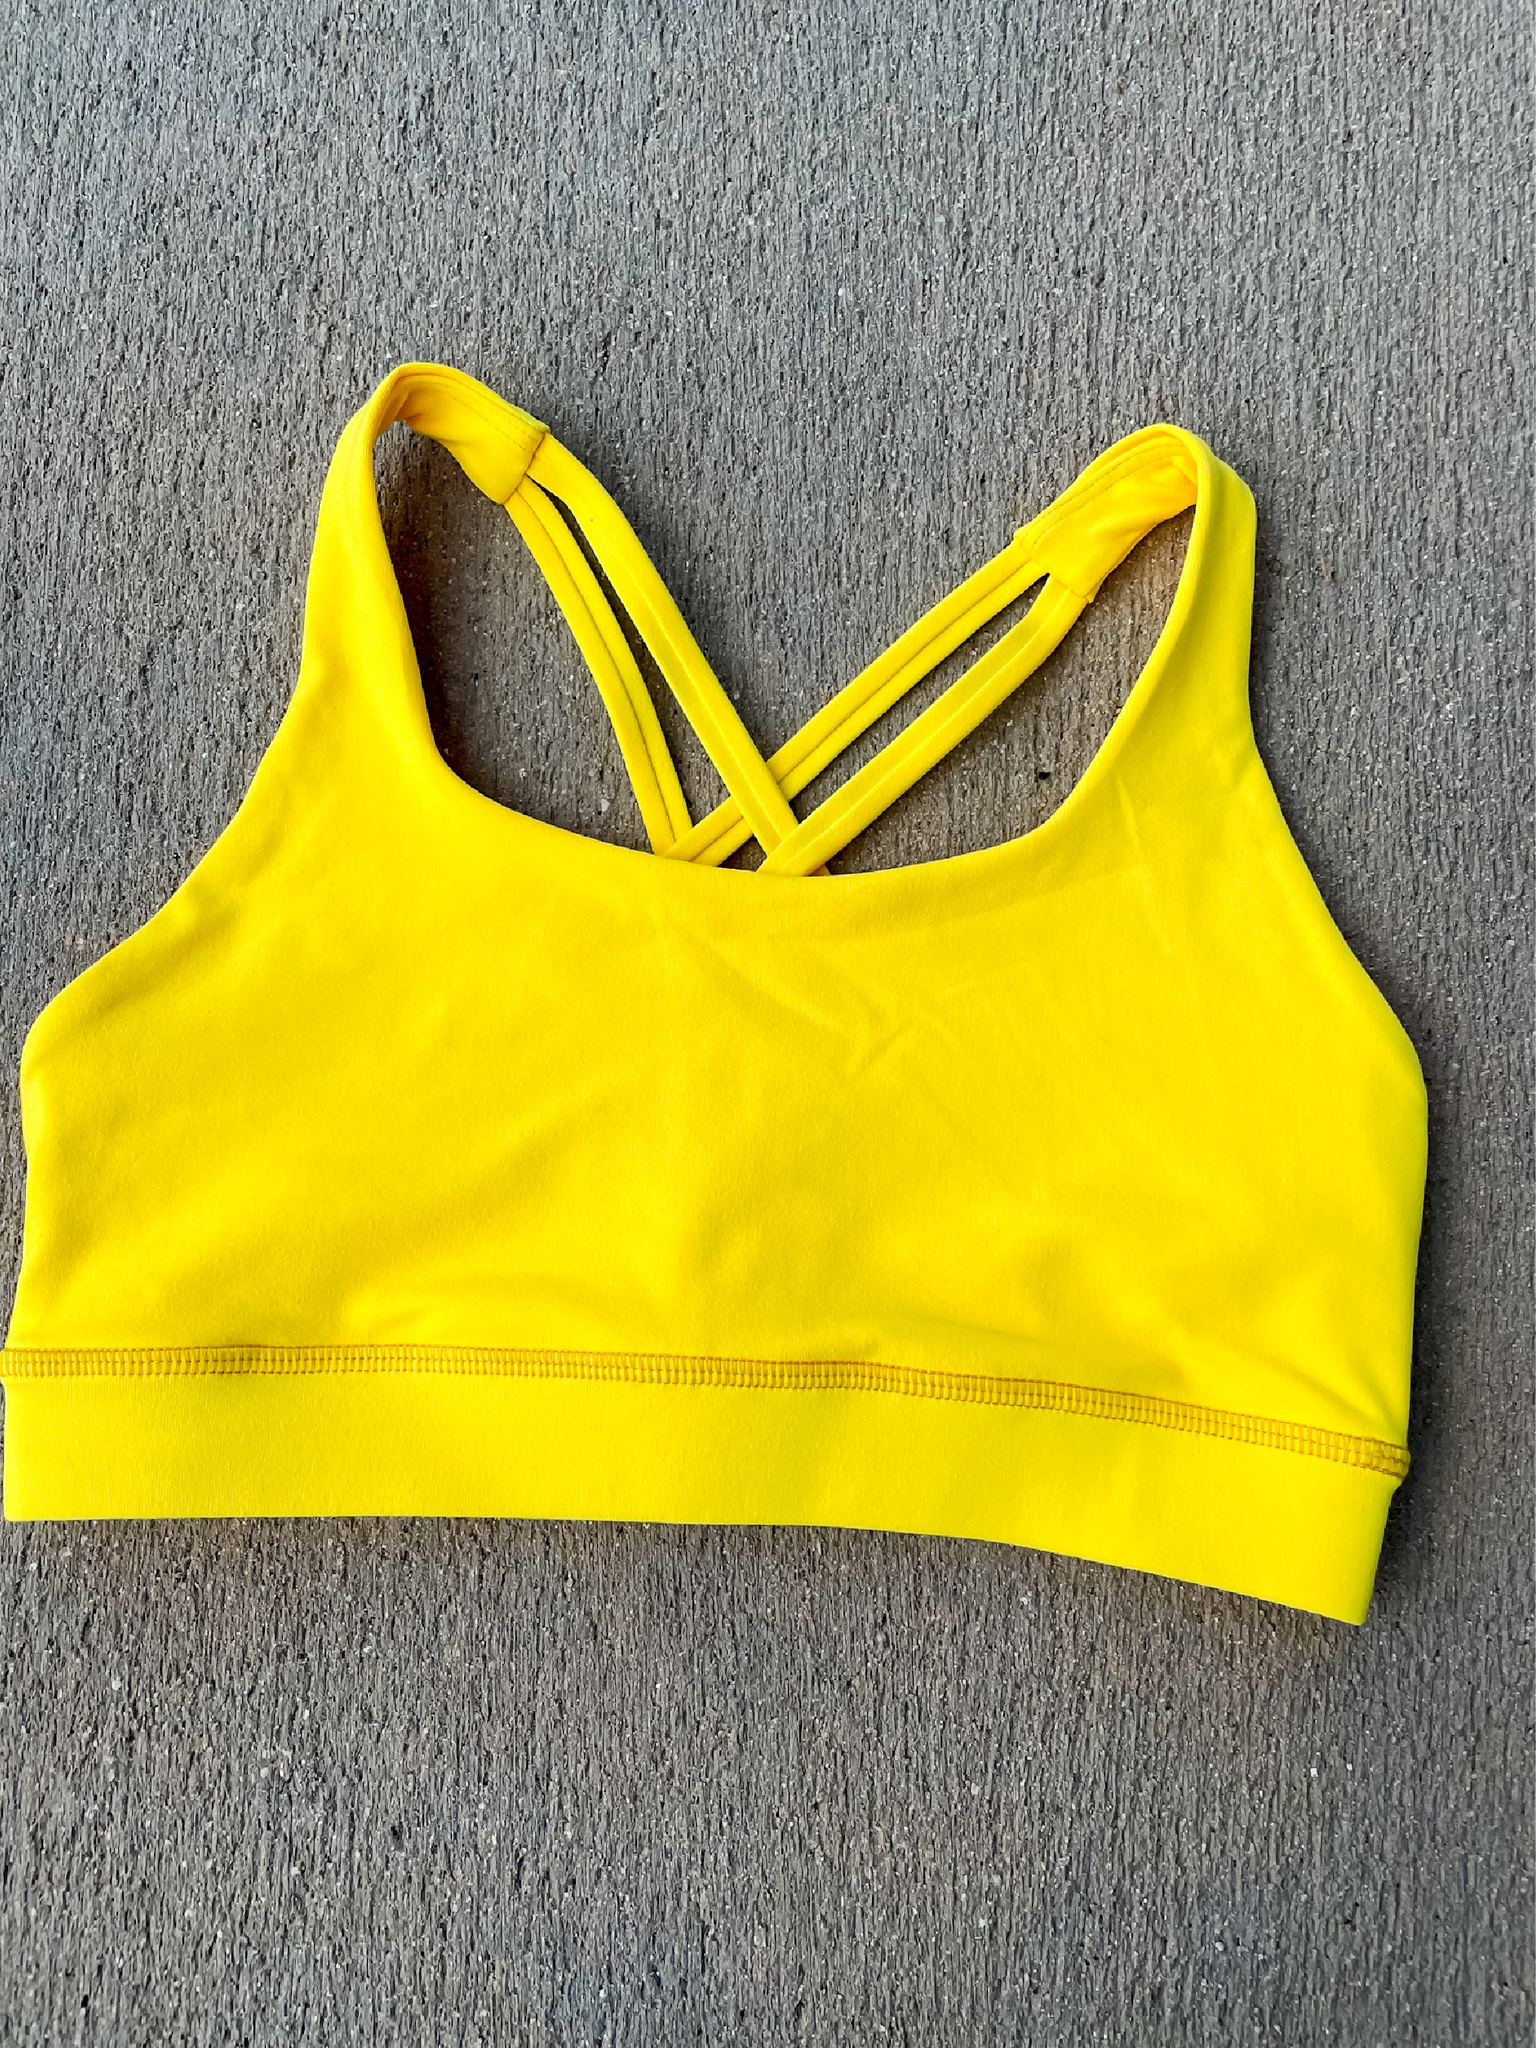 Lululemon Sports Bra Size 2 Yellow - $40 (23% Off Retail) - From